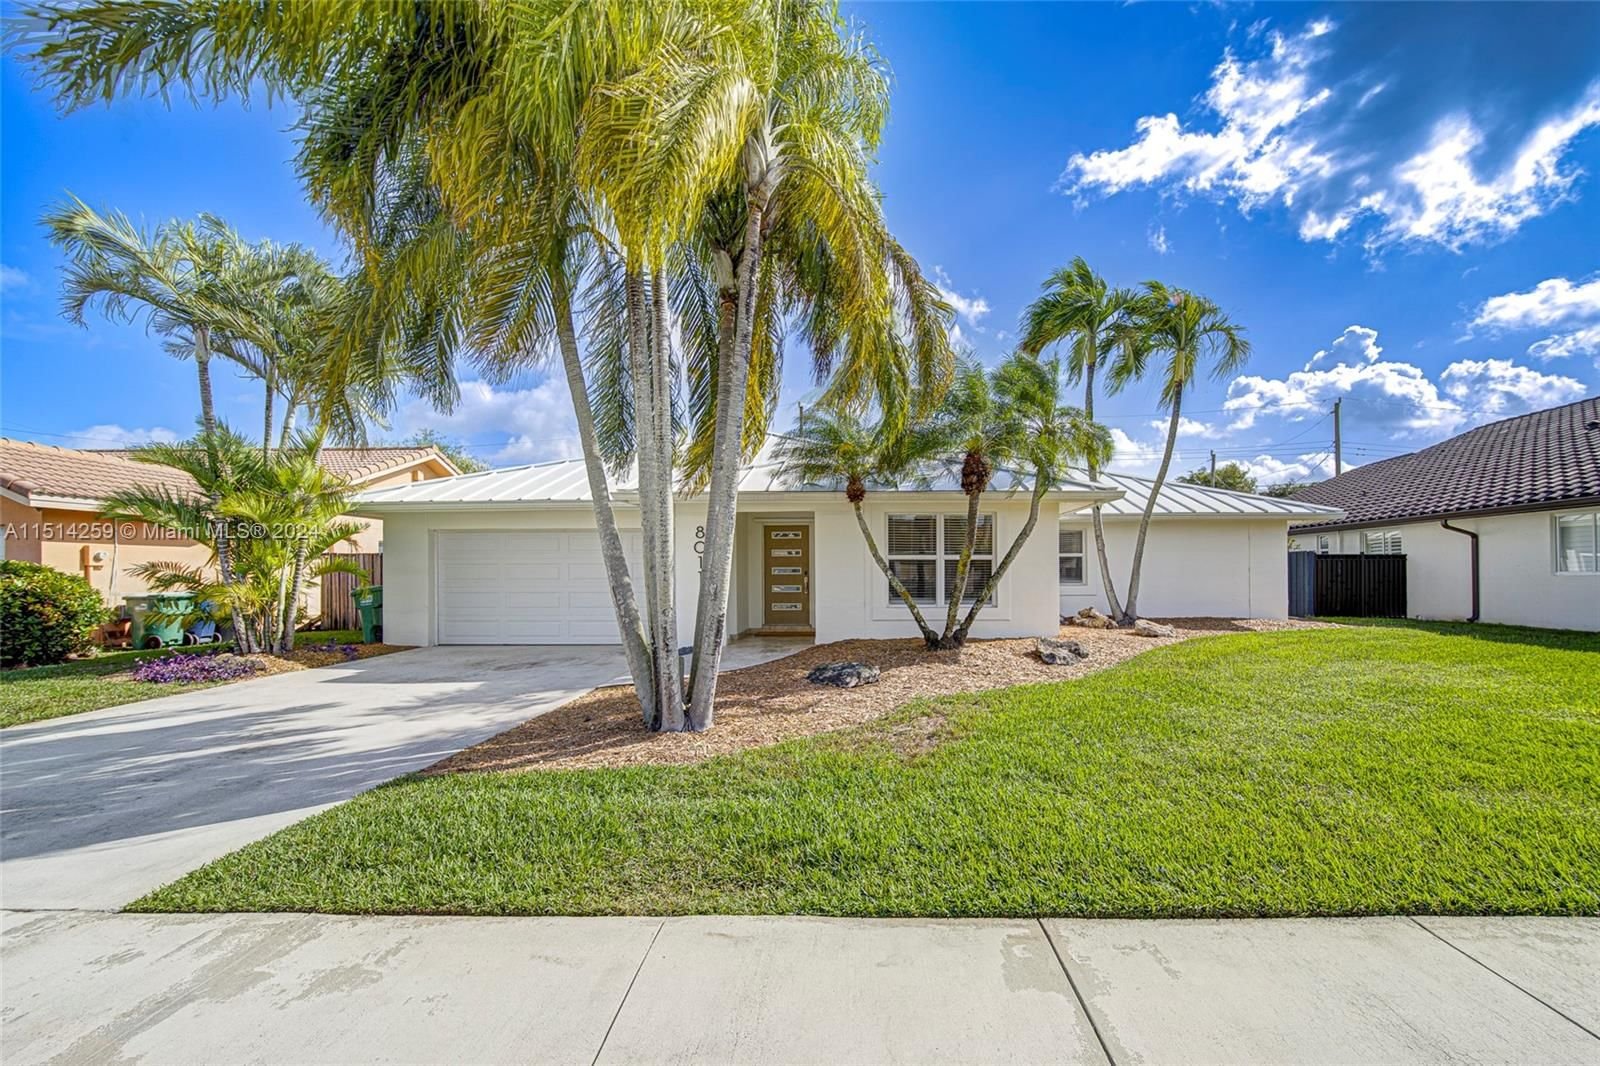 Real estate property located at 8011 89th Ave, Miami-Dade County, HIBISCUS ESTATES, Miami, FL